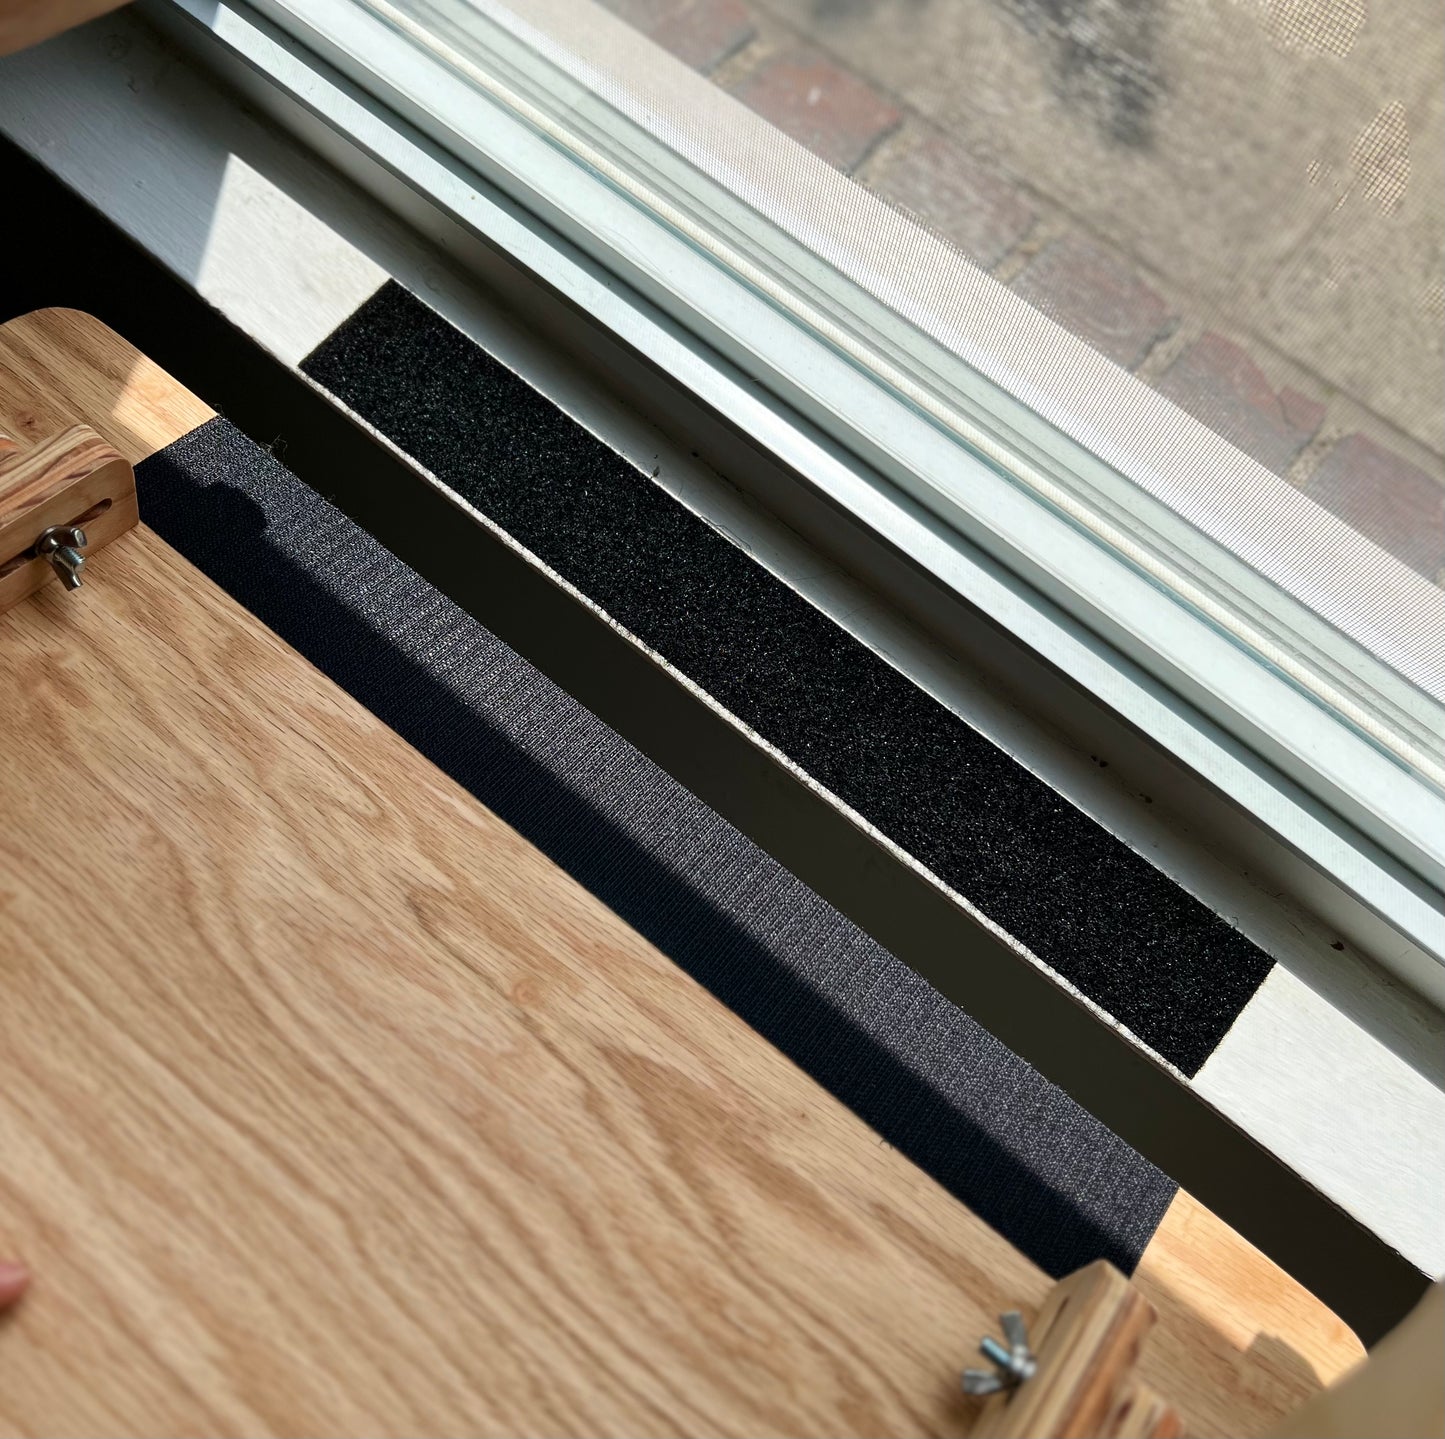 THENAMU 7, 22” x 10.5” Non-slip, Cat Window Perch, Cat Window Shelf, Cat Window Seat, Installed-removed 1 minute, No tools No nails